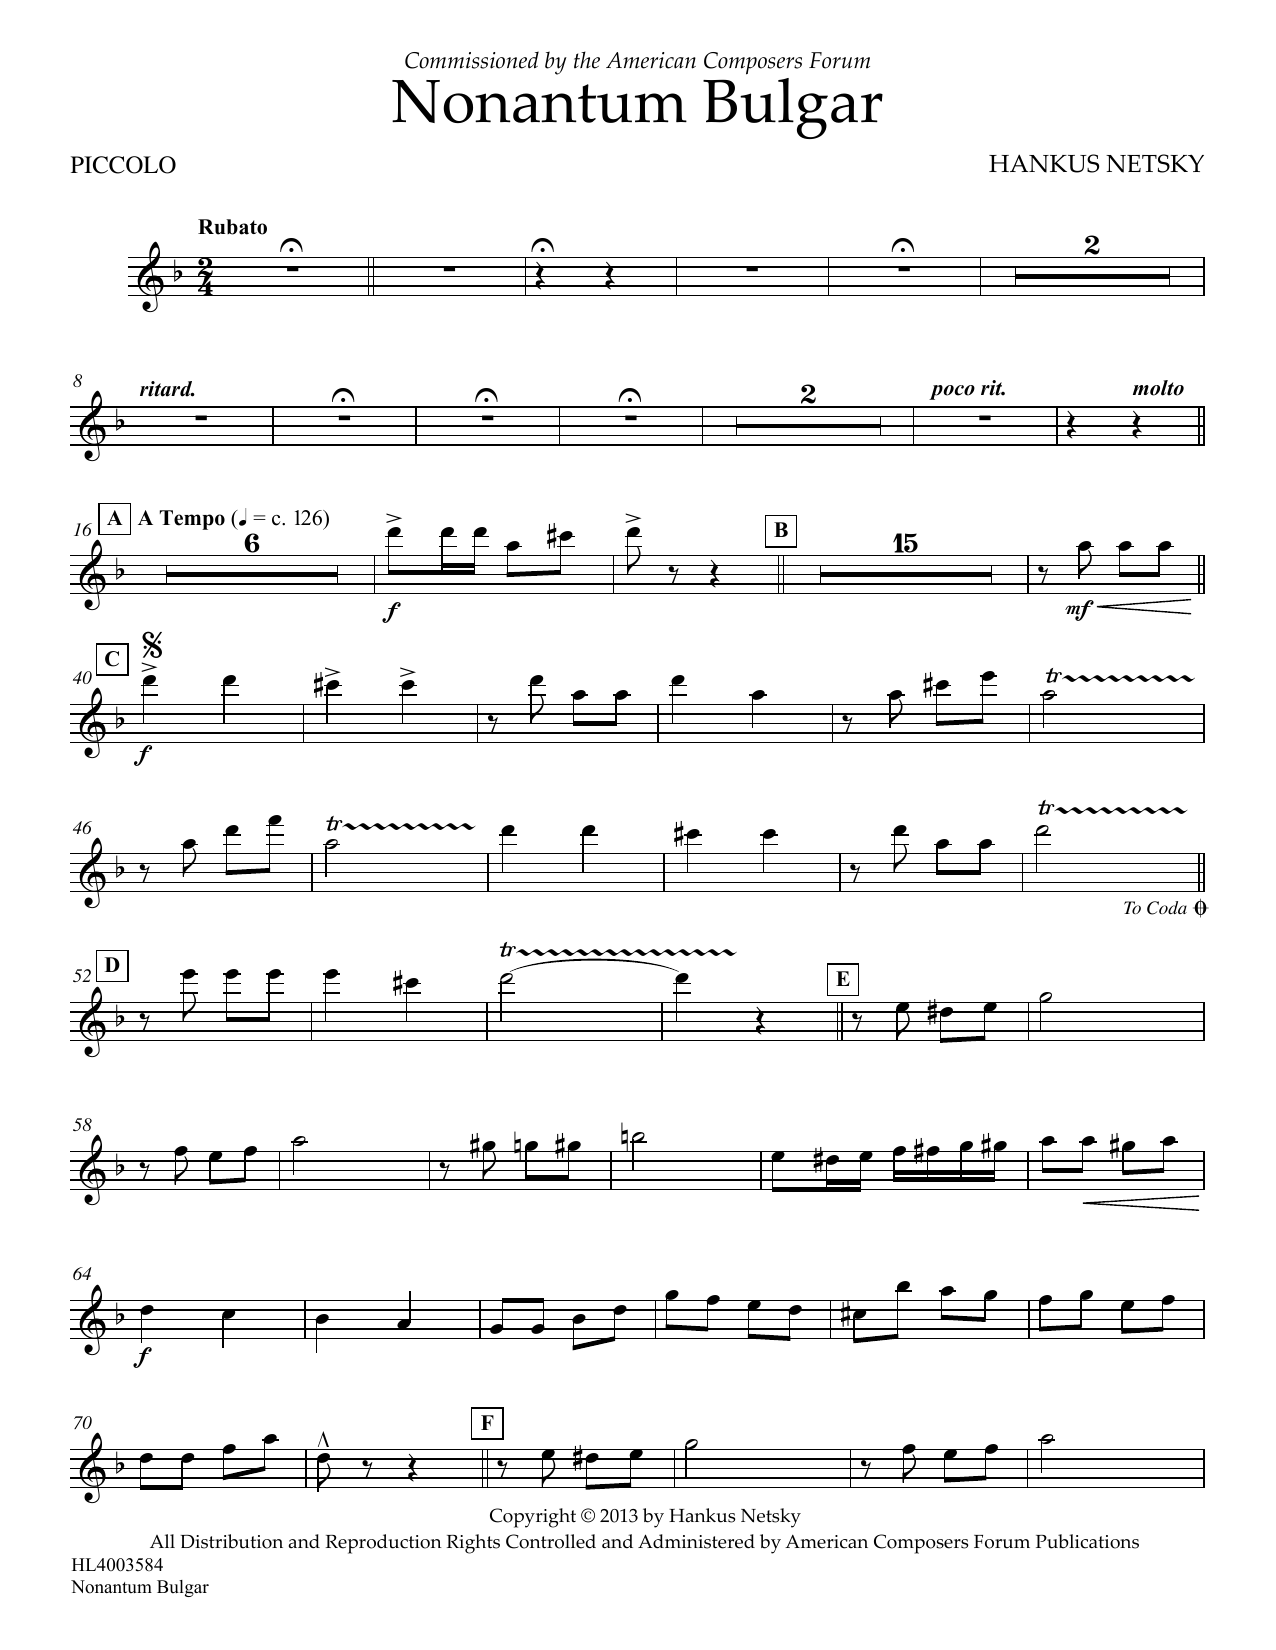 Hankus Netsky Nonantum Bulgar - Piccolo Sheet Music Notes & Chords for Concert Band - Download or Print PDF